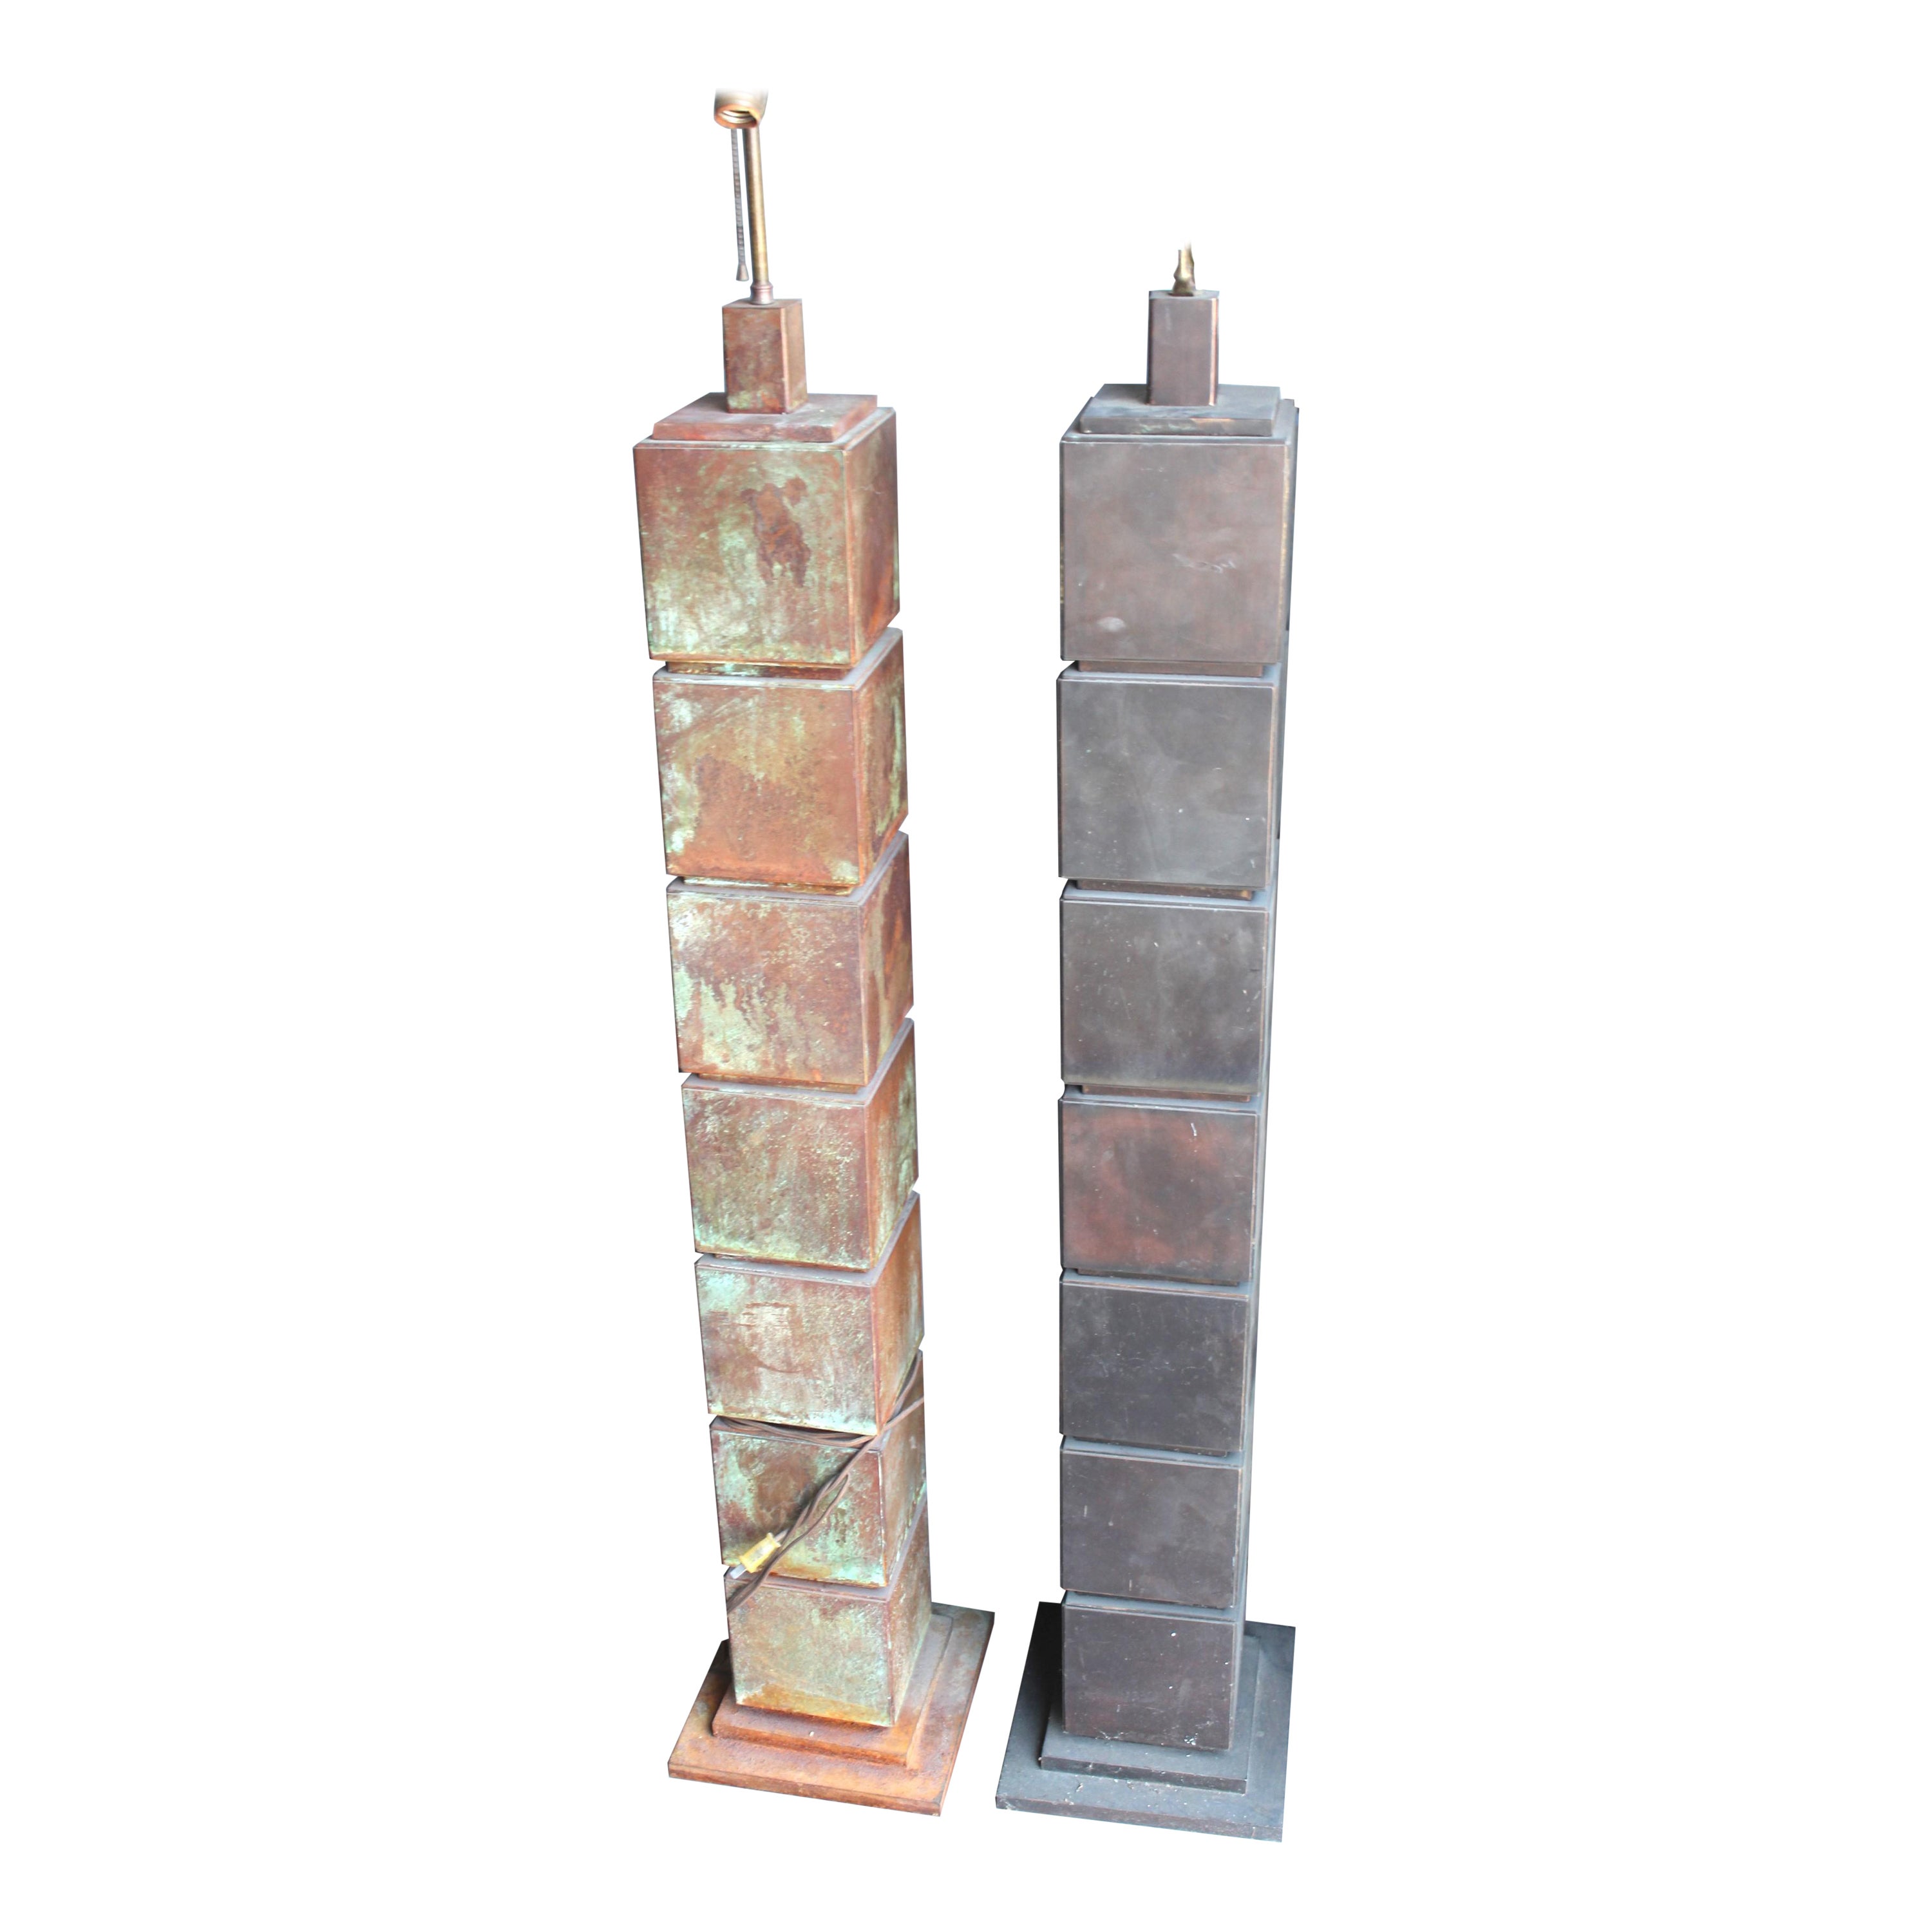 Deco/Modern  Steel block Floor Lamp  (2) available For Sale